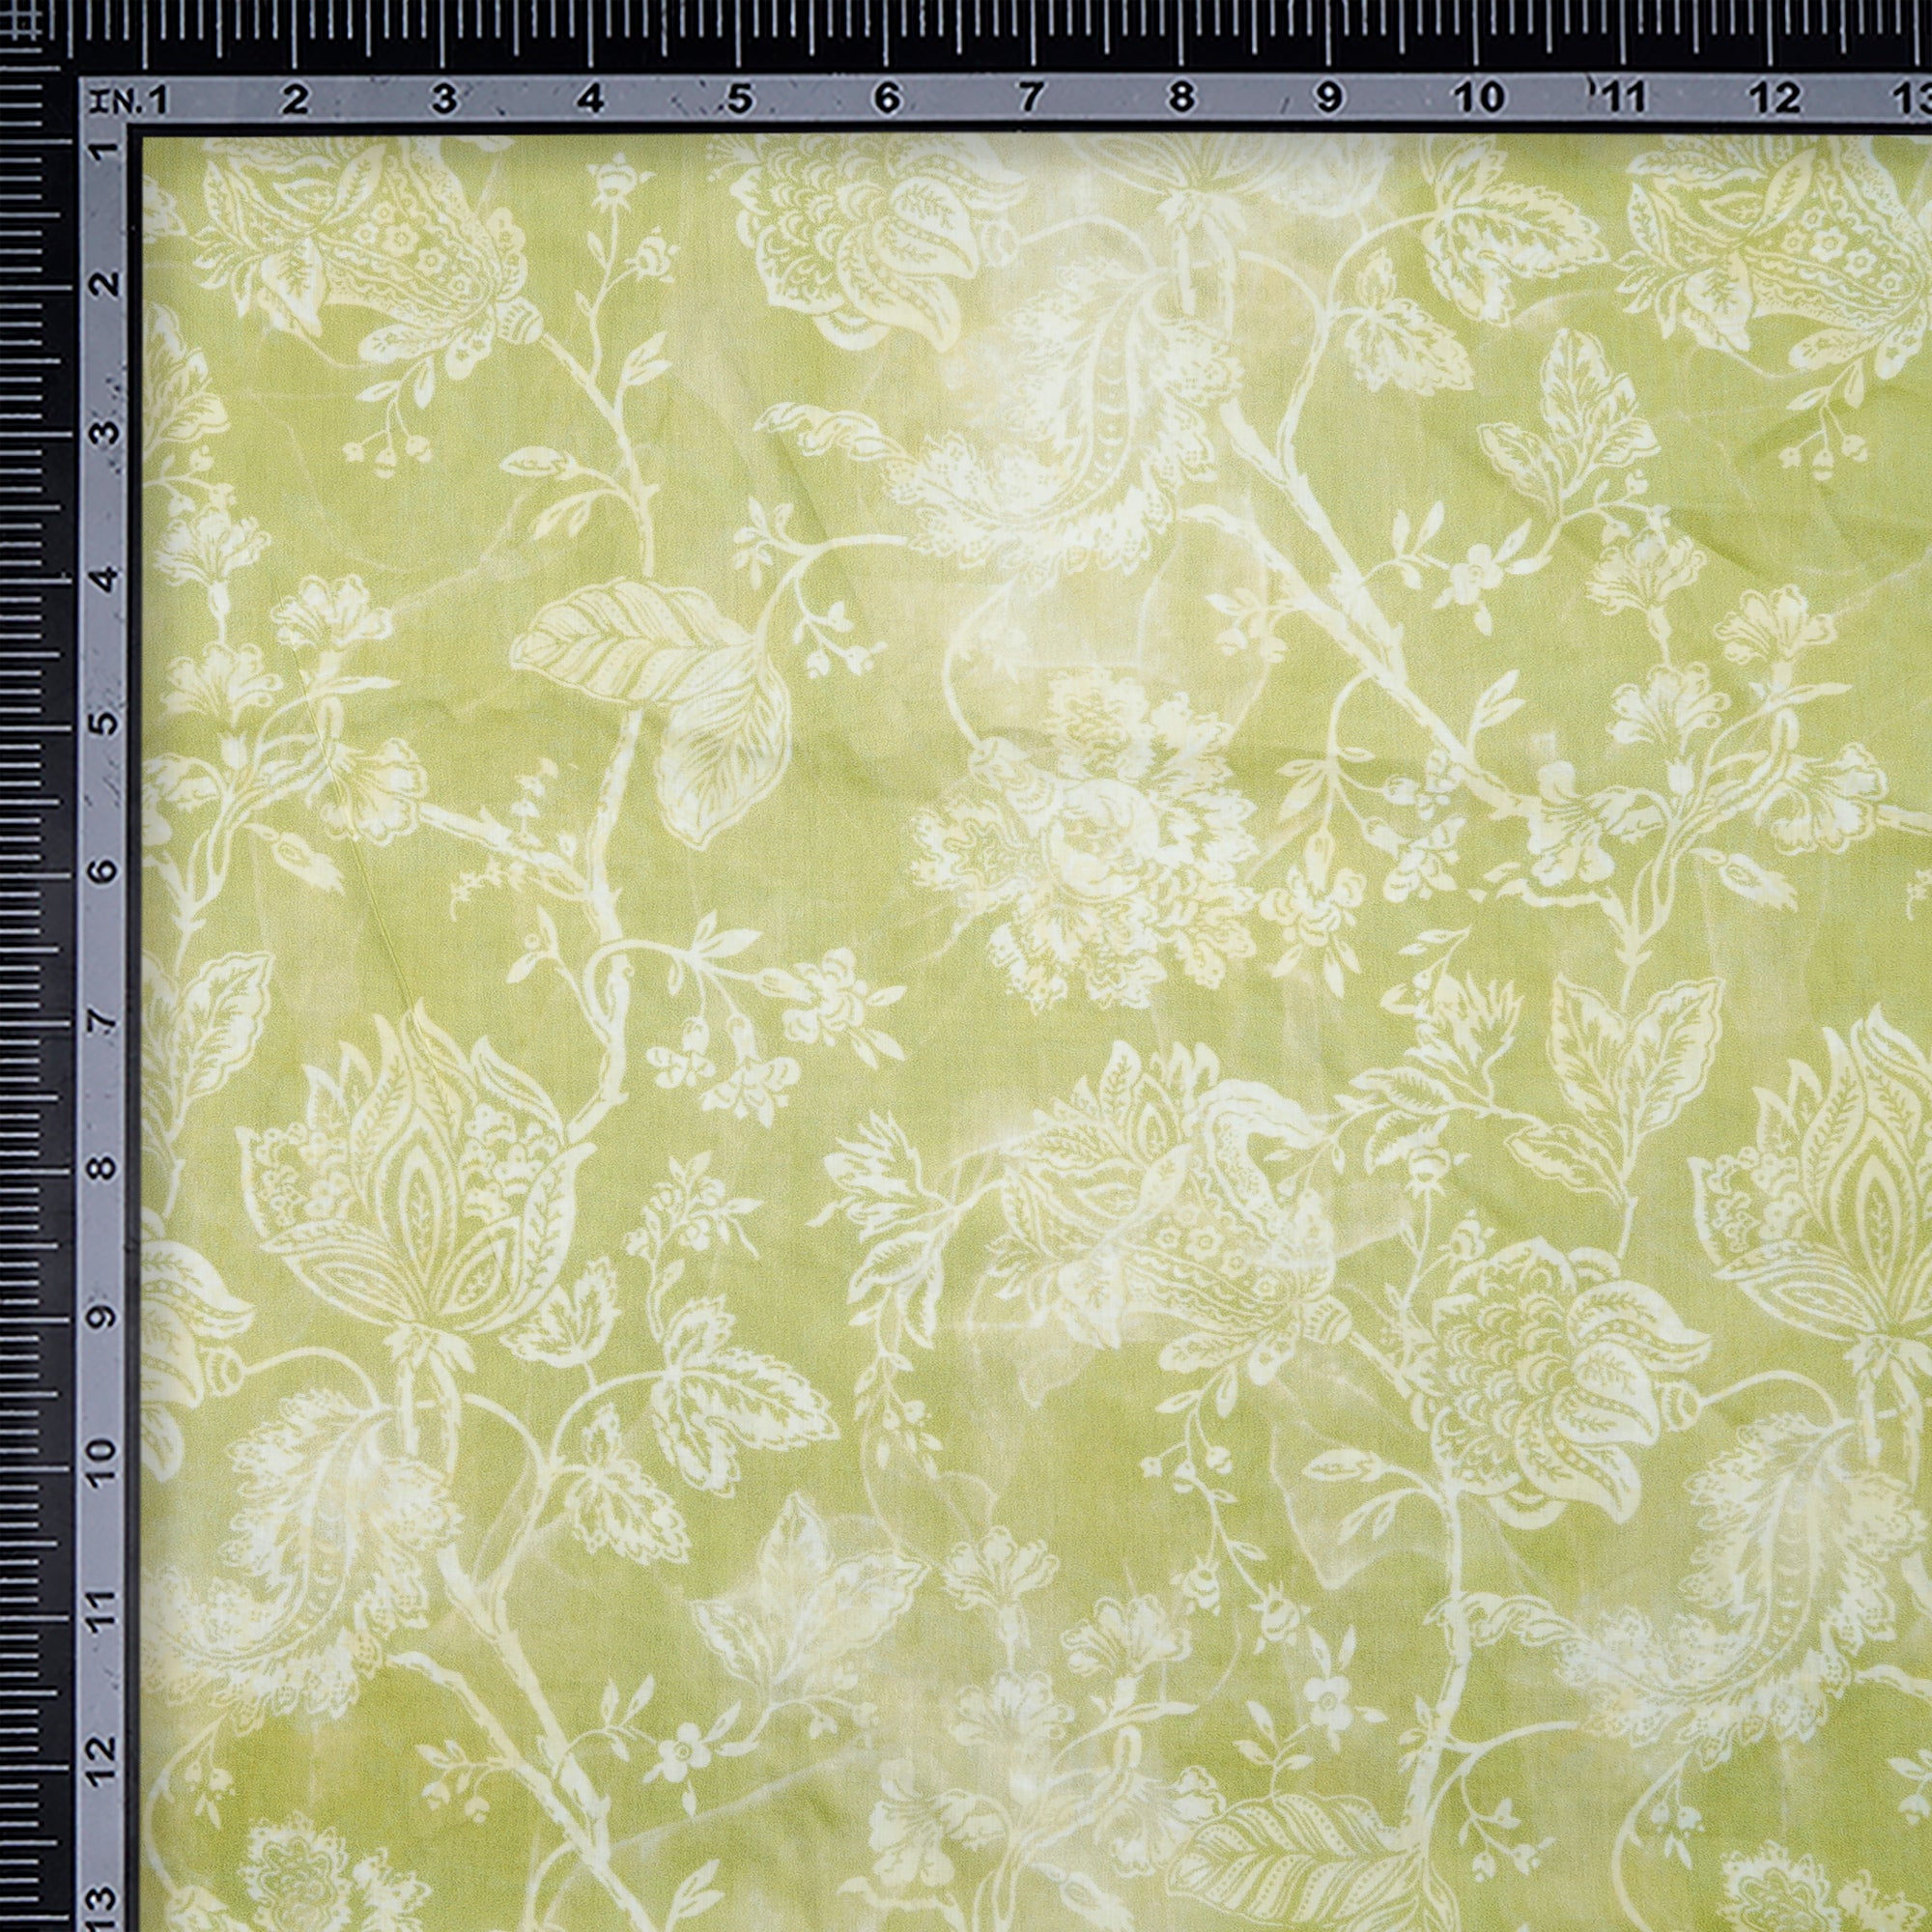 Parrot Green Floral Pattern Digital Print Lawn Fabric